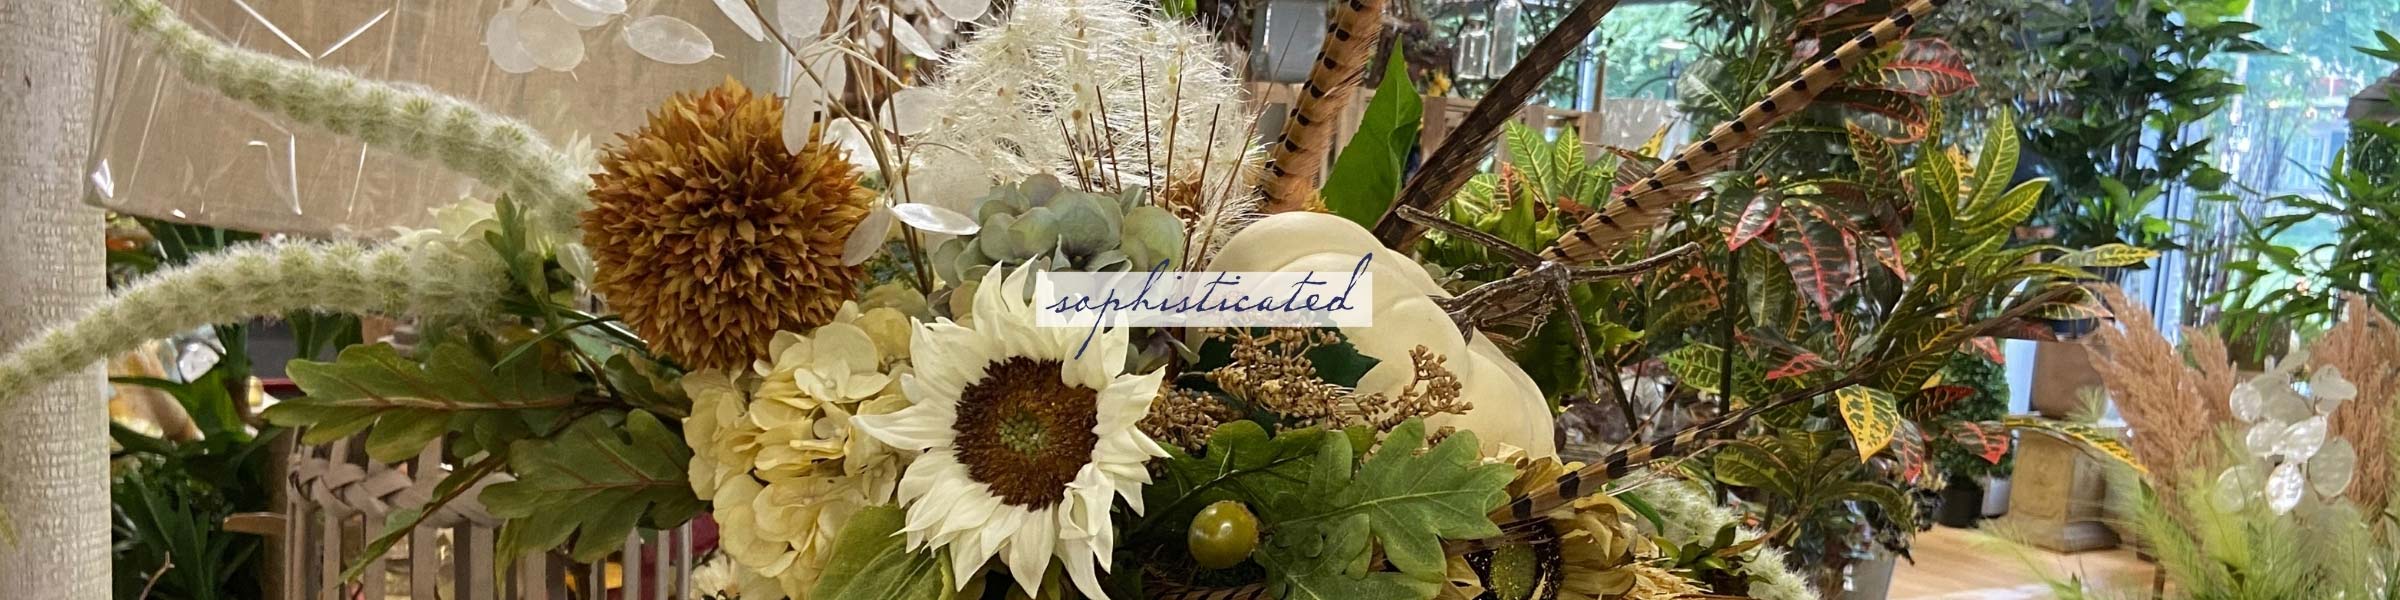 Sophisticated floral designs and arrangements